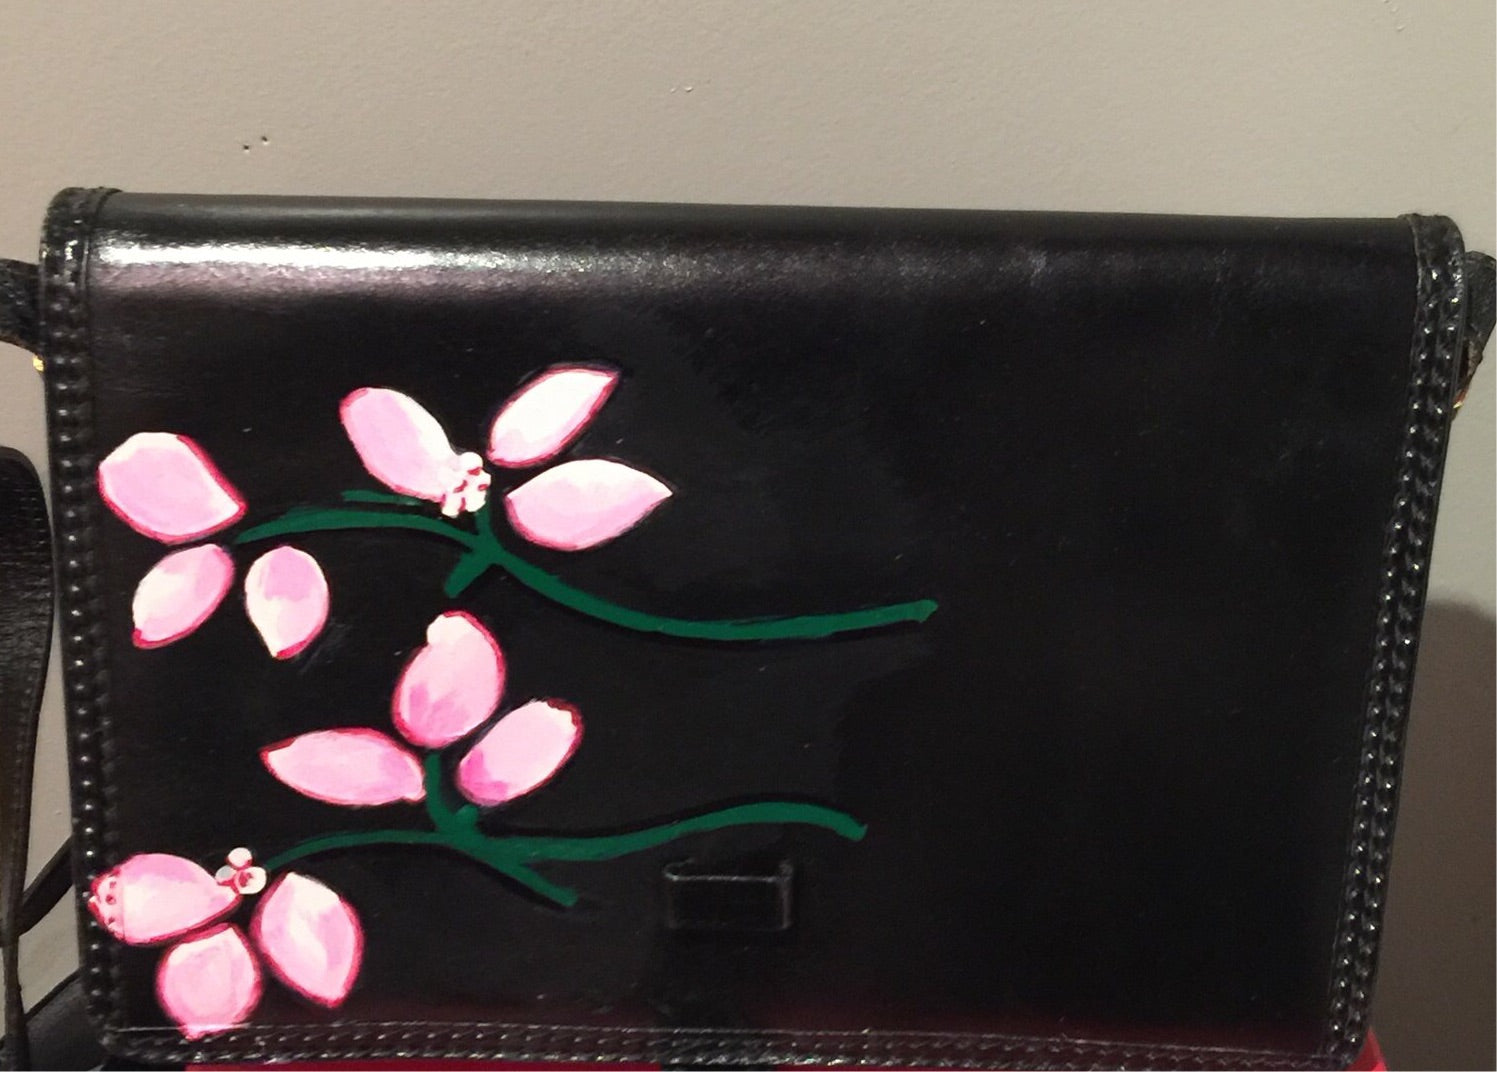 Art Fusion "Cherry Blossom" Handbag Designed by Lisa Barber